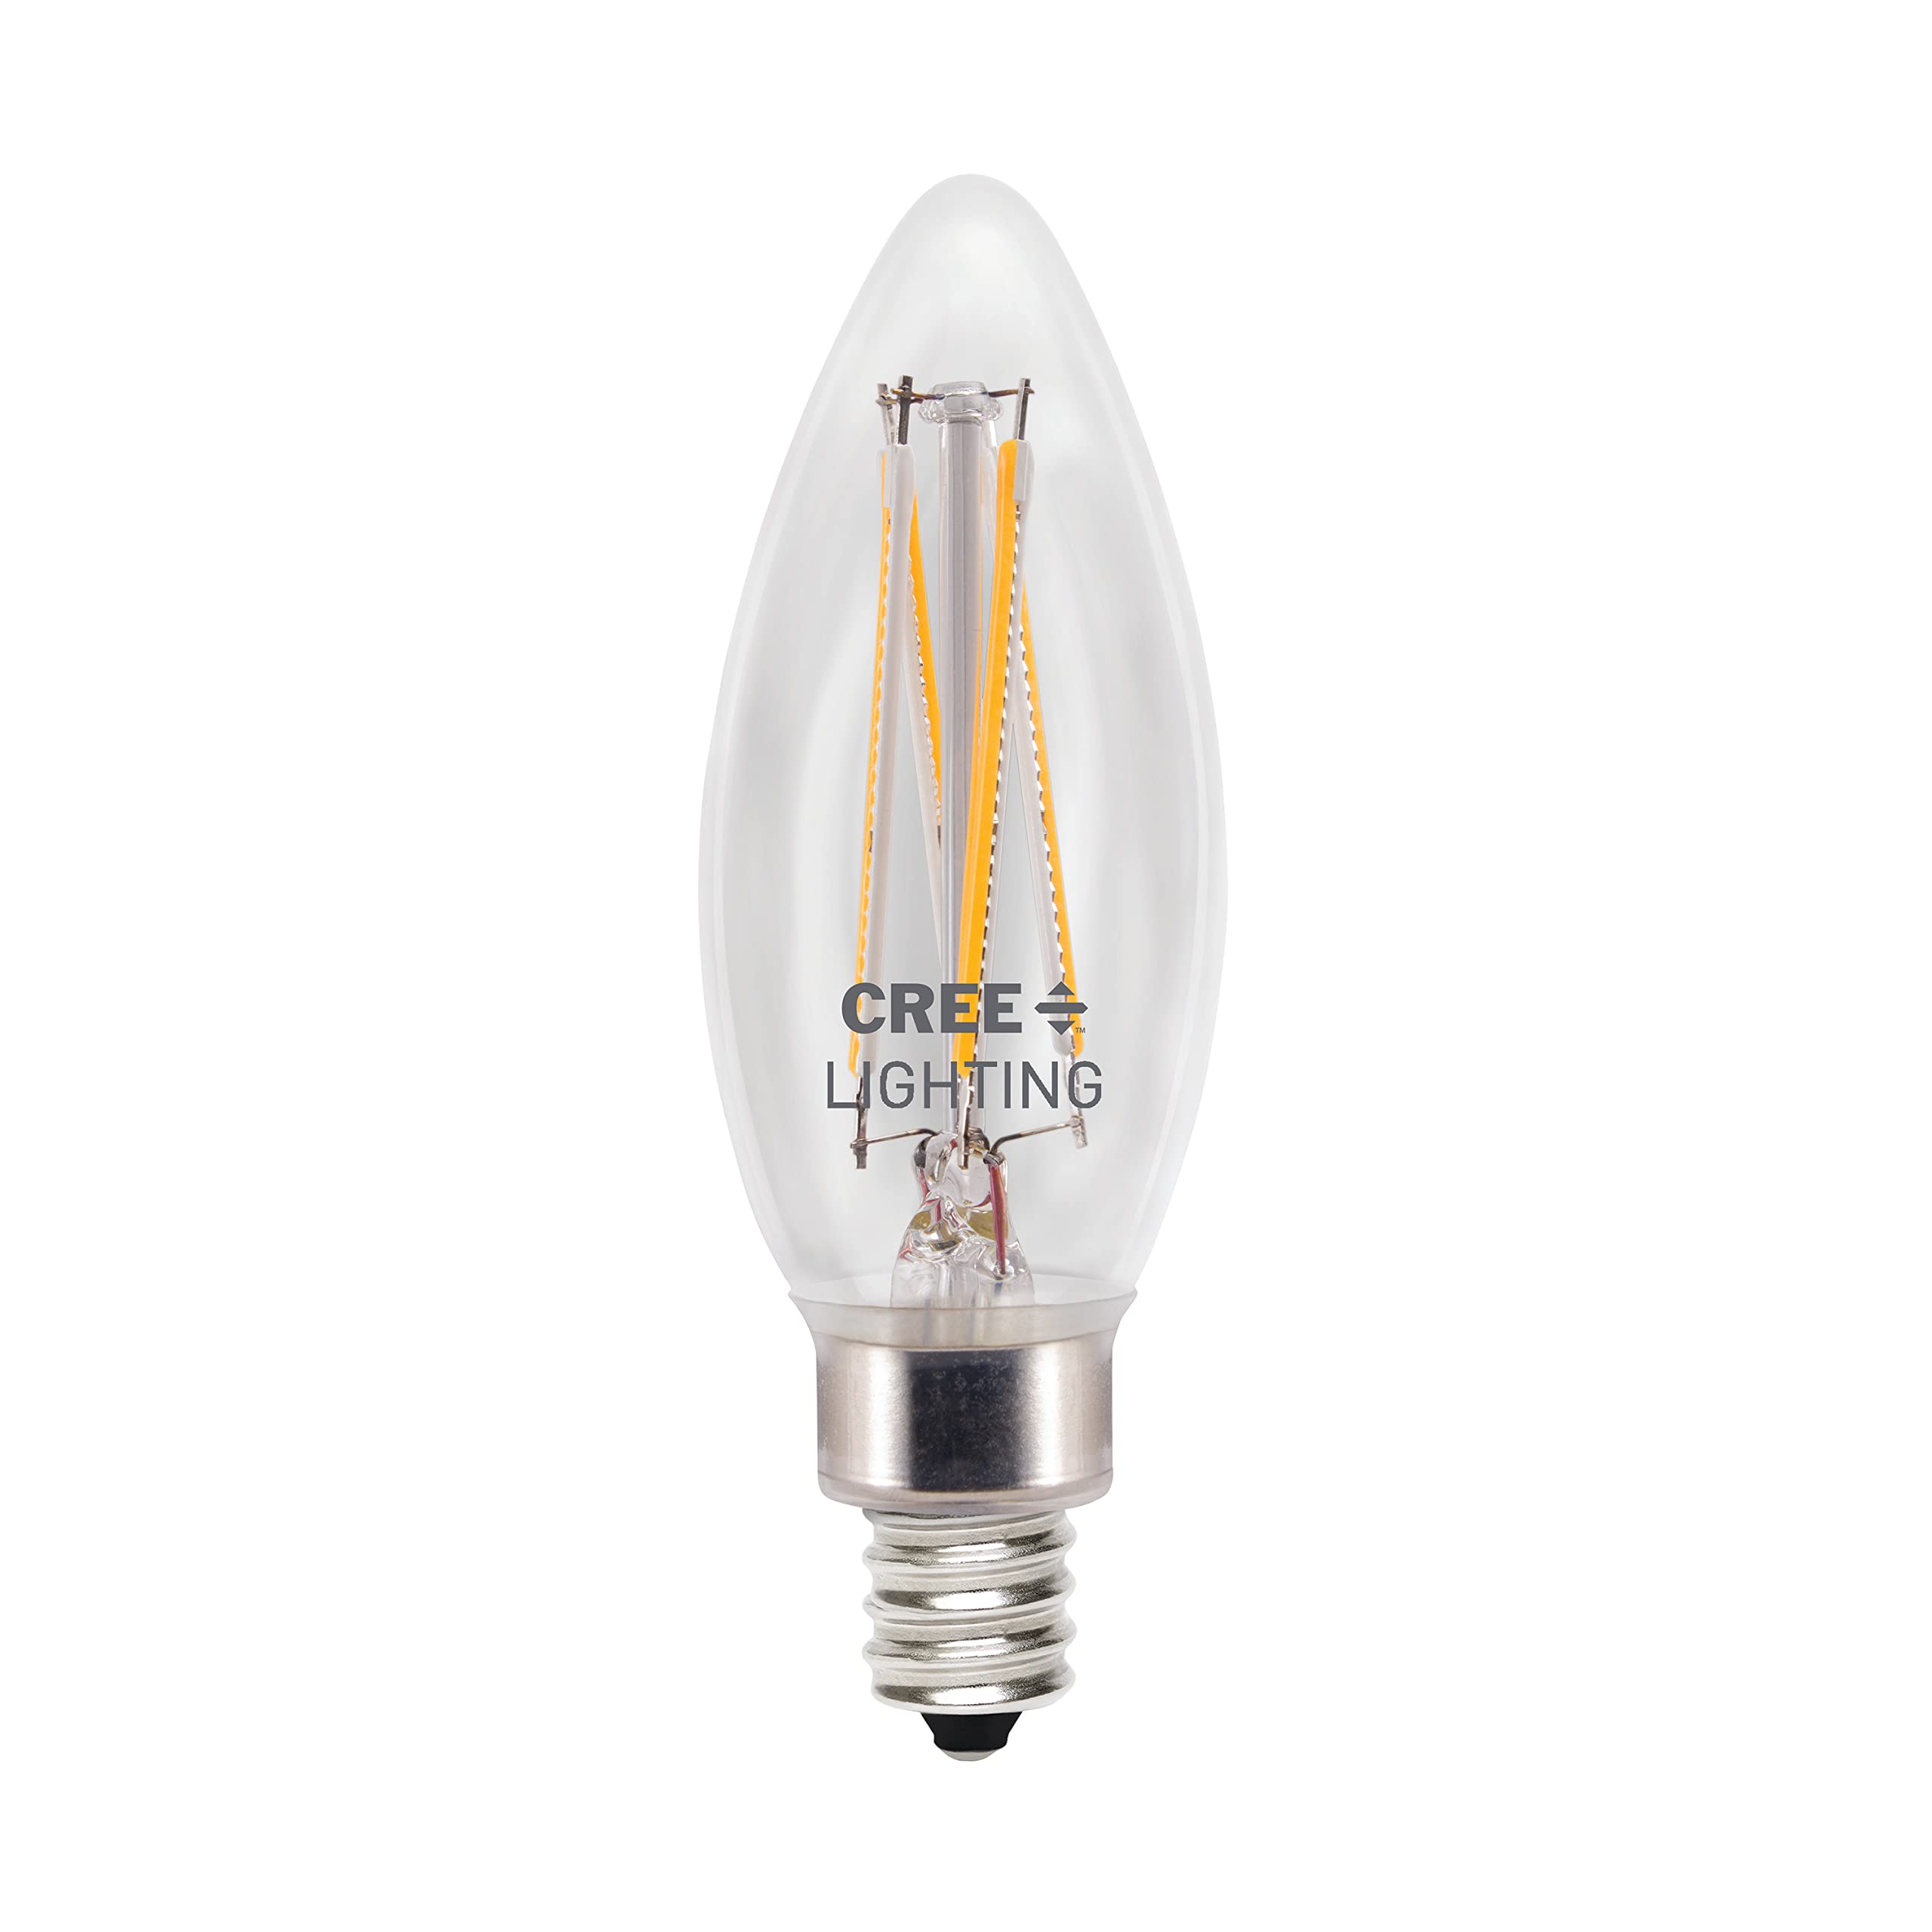 Cree Lighting Pro Series B11 Clear Glass Filament Candelabra 40 Watt Equivalent, Daylight (5000k), Dimmable